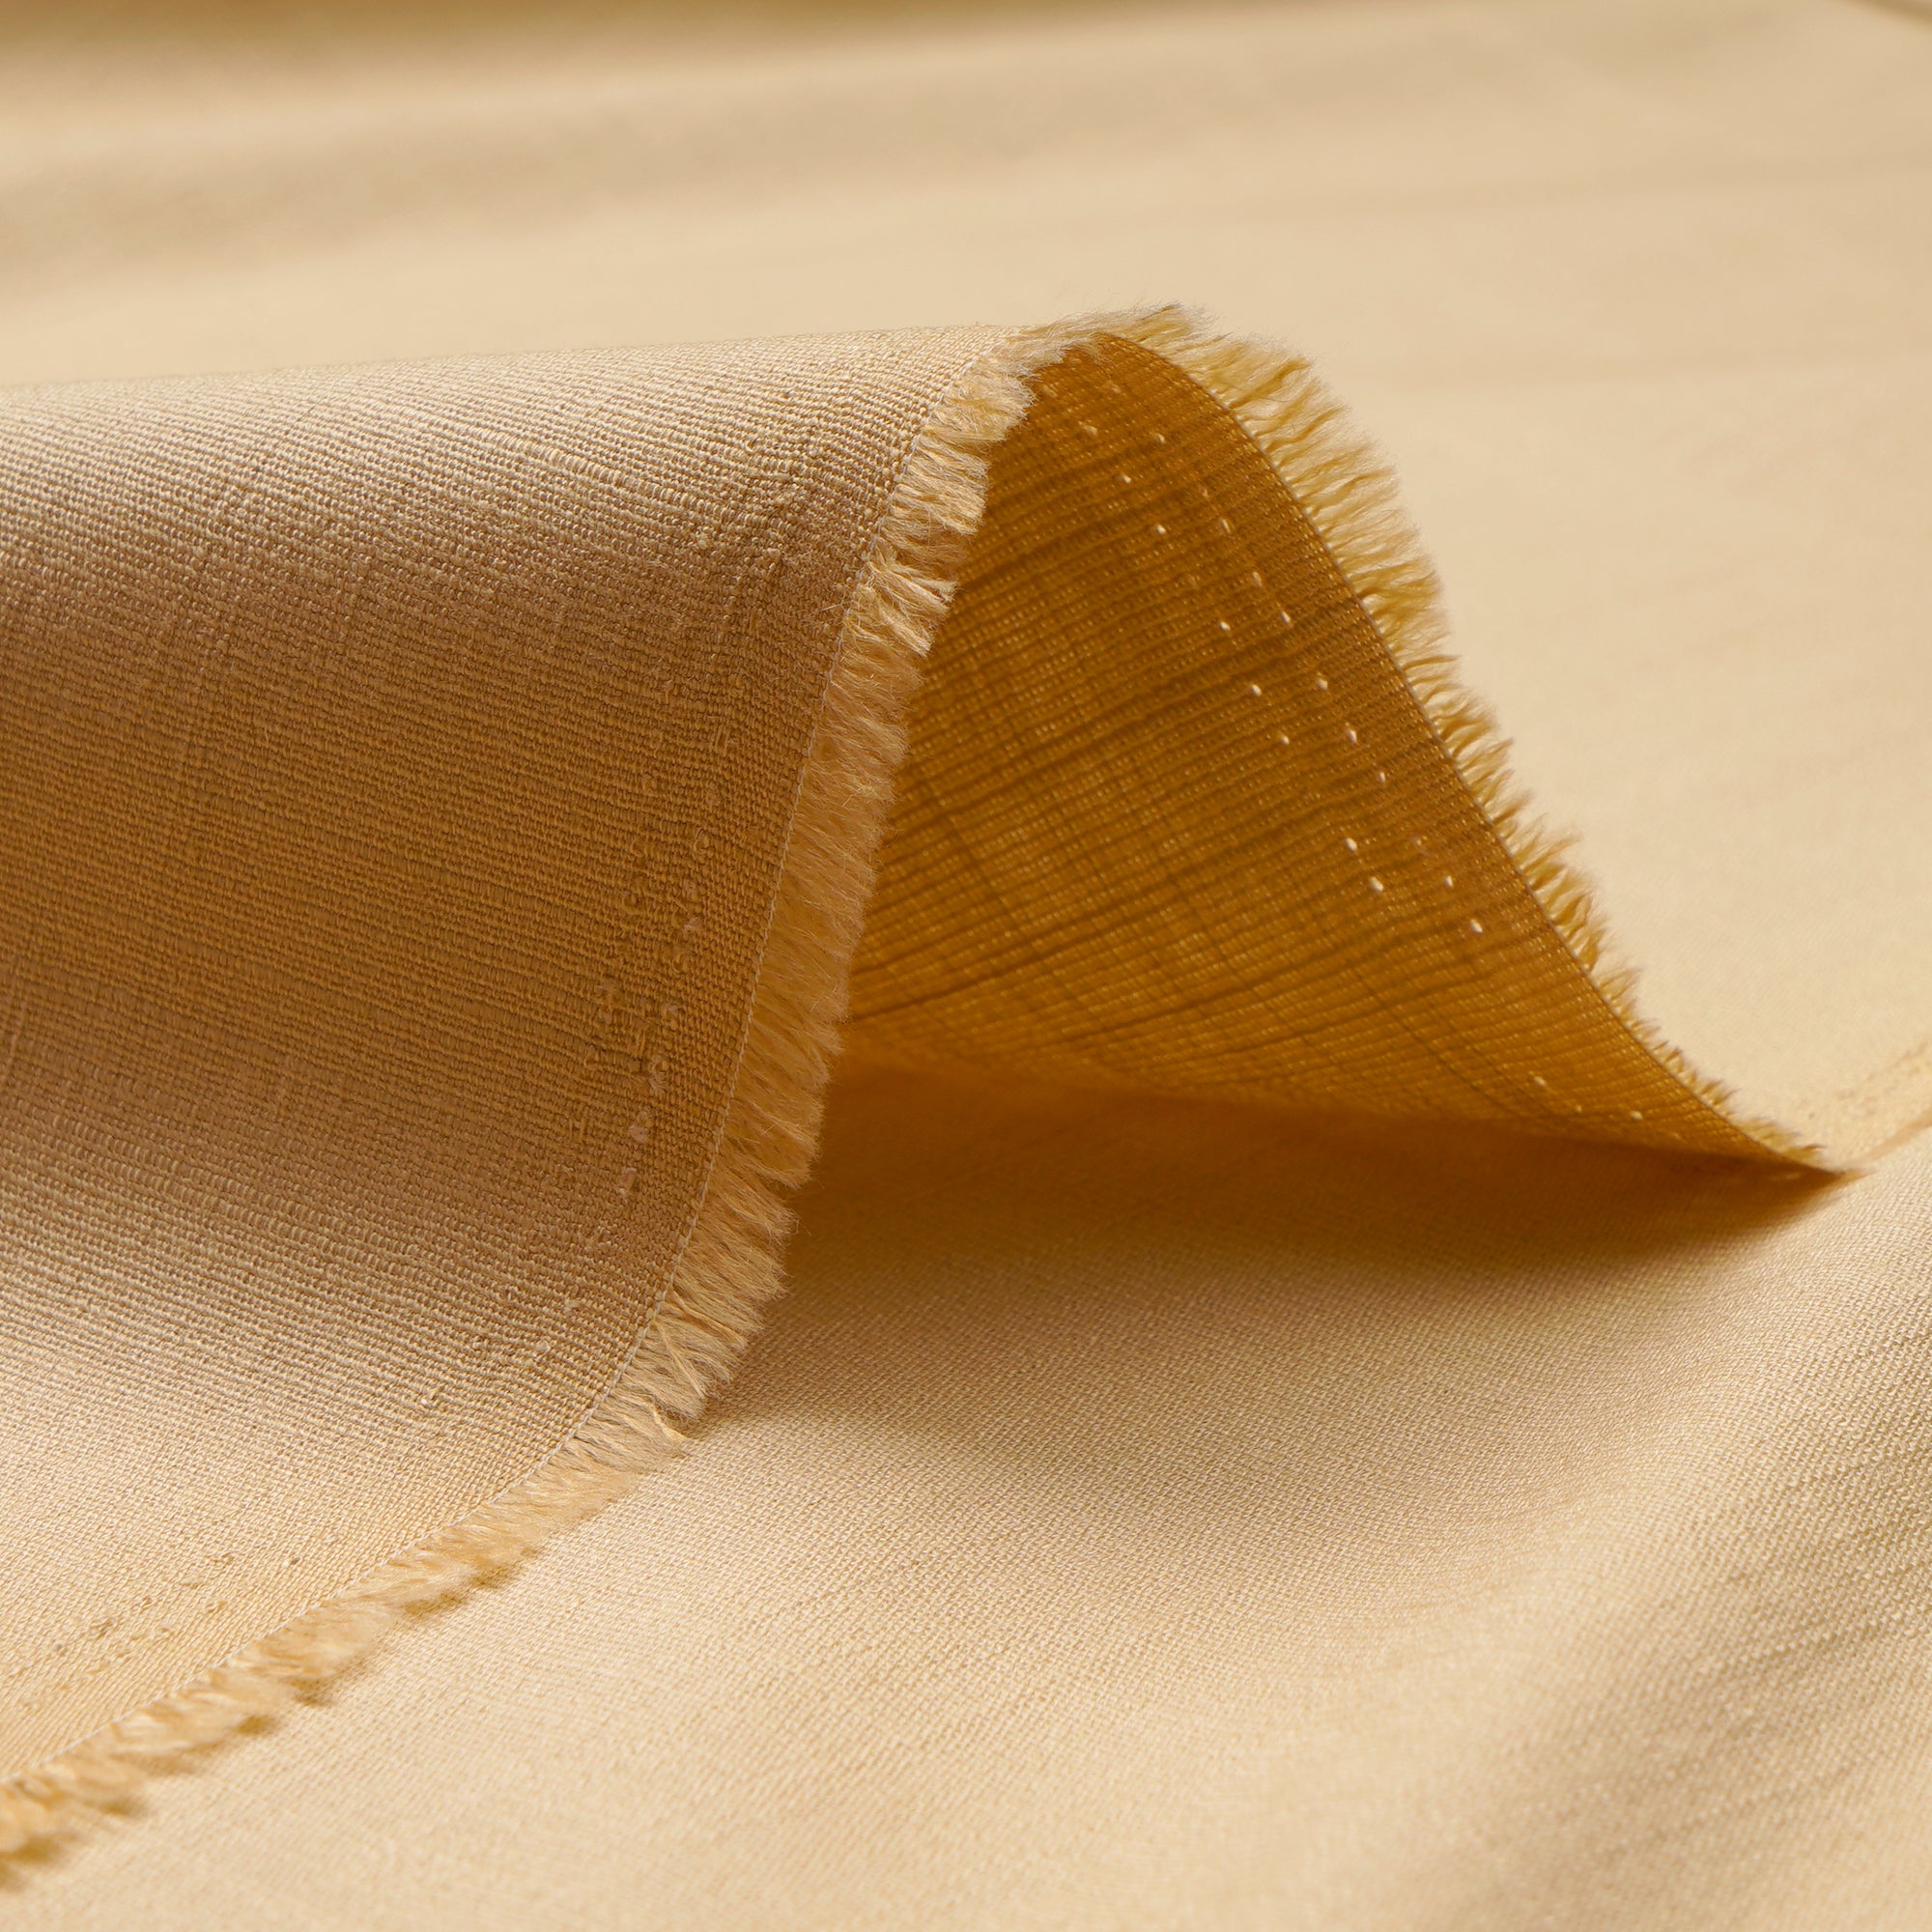 Beige Stretch Viscose Lycra South Cotton Fabric